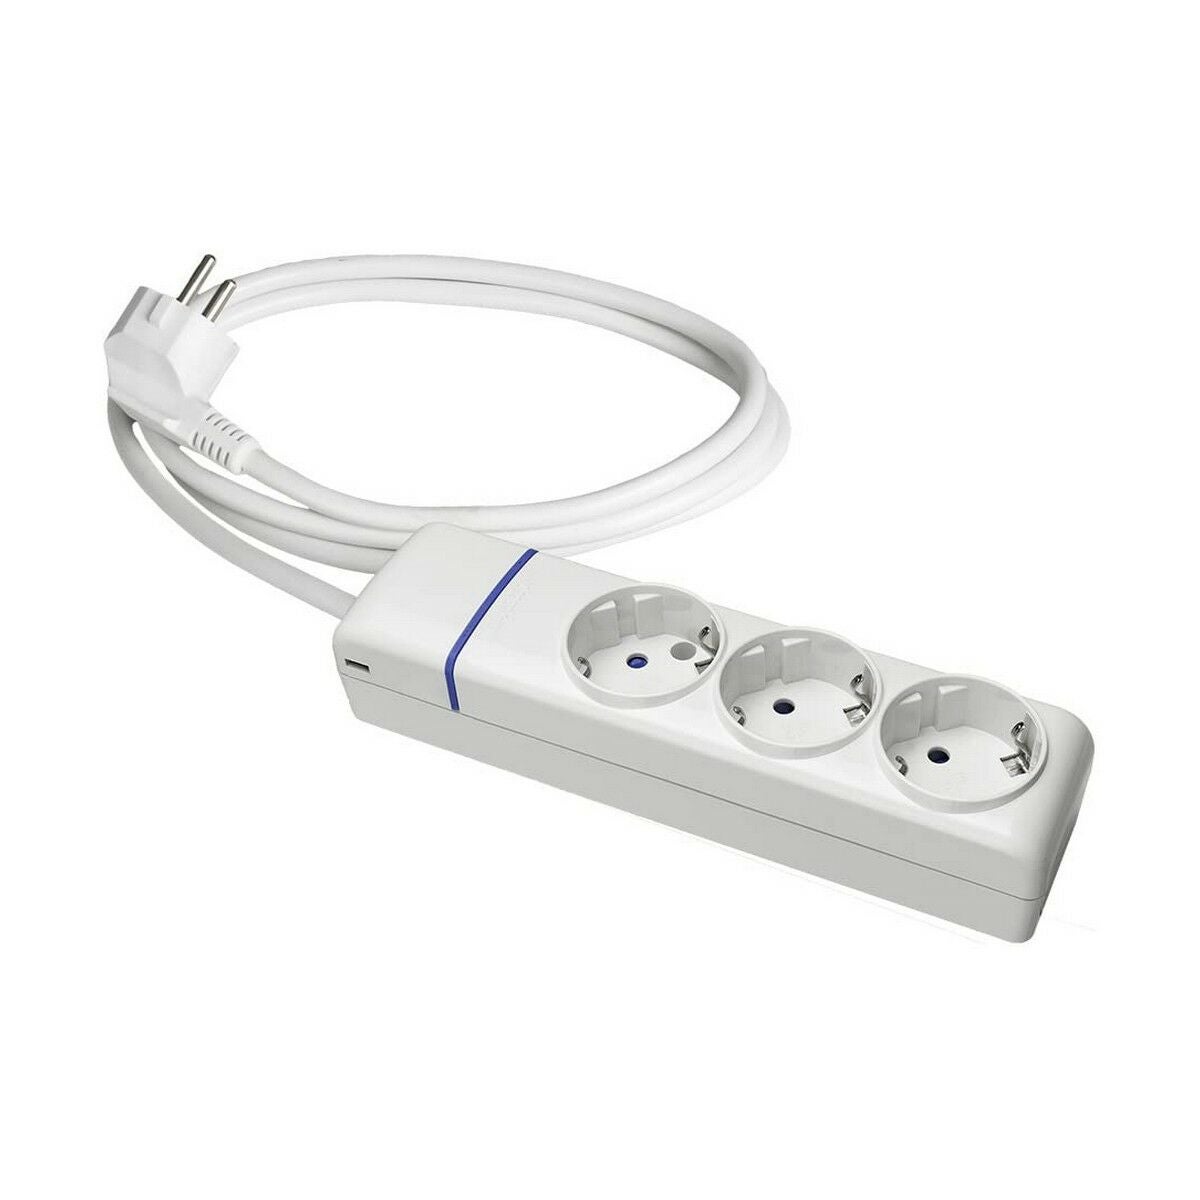 Garza Power - Regleta Base múltiple de 3 tomas con interruptor sin cable,  Color Blanco